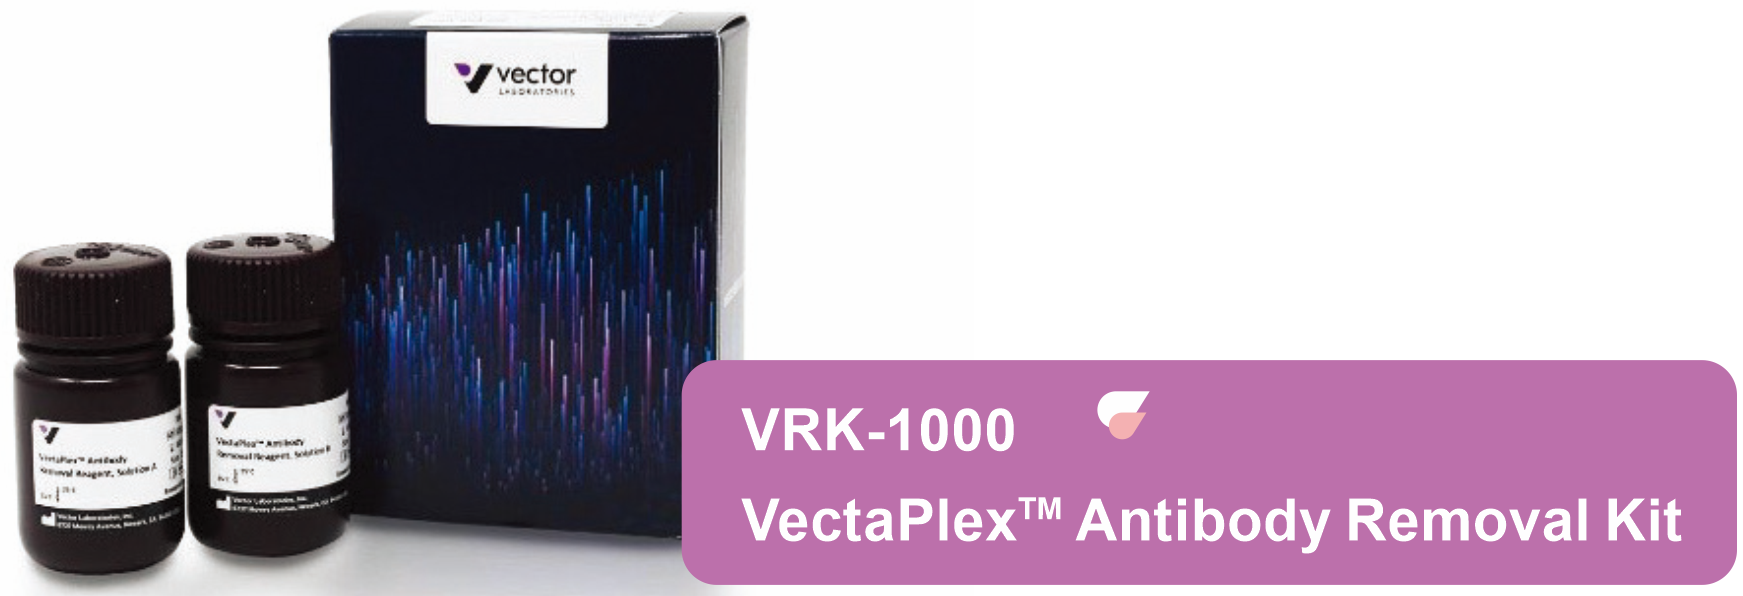 VectaPlex™ Antibody Removal Kit  ——简化您的多重免疫荧光(mIHC)染色